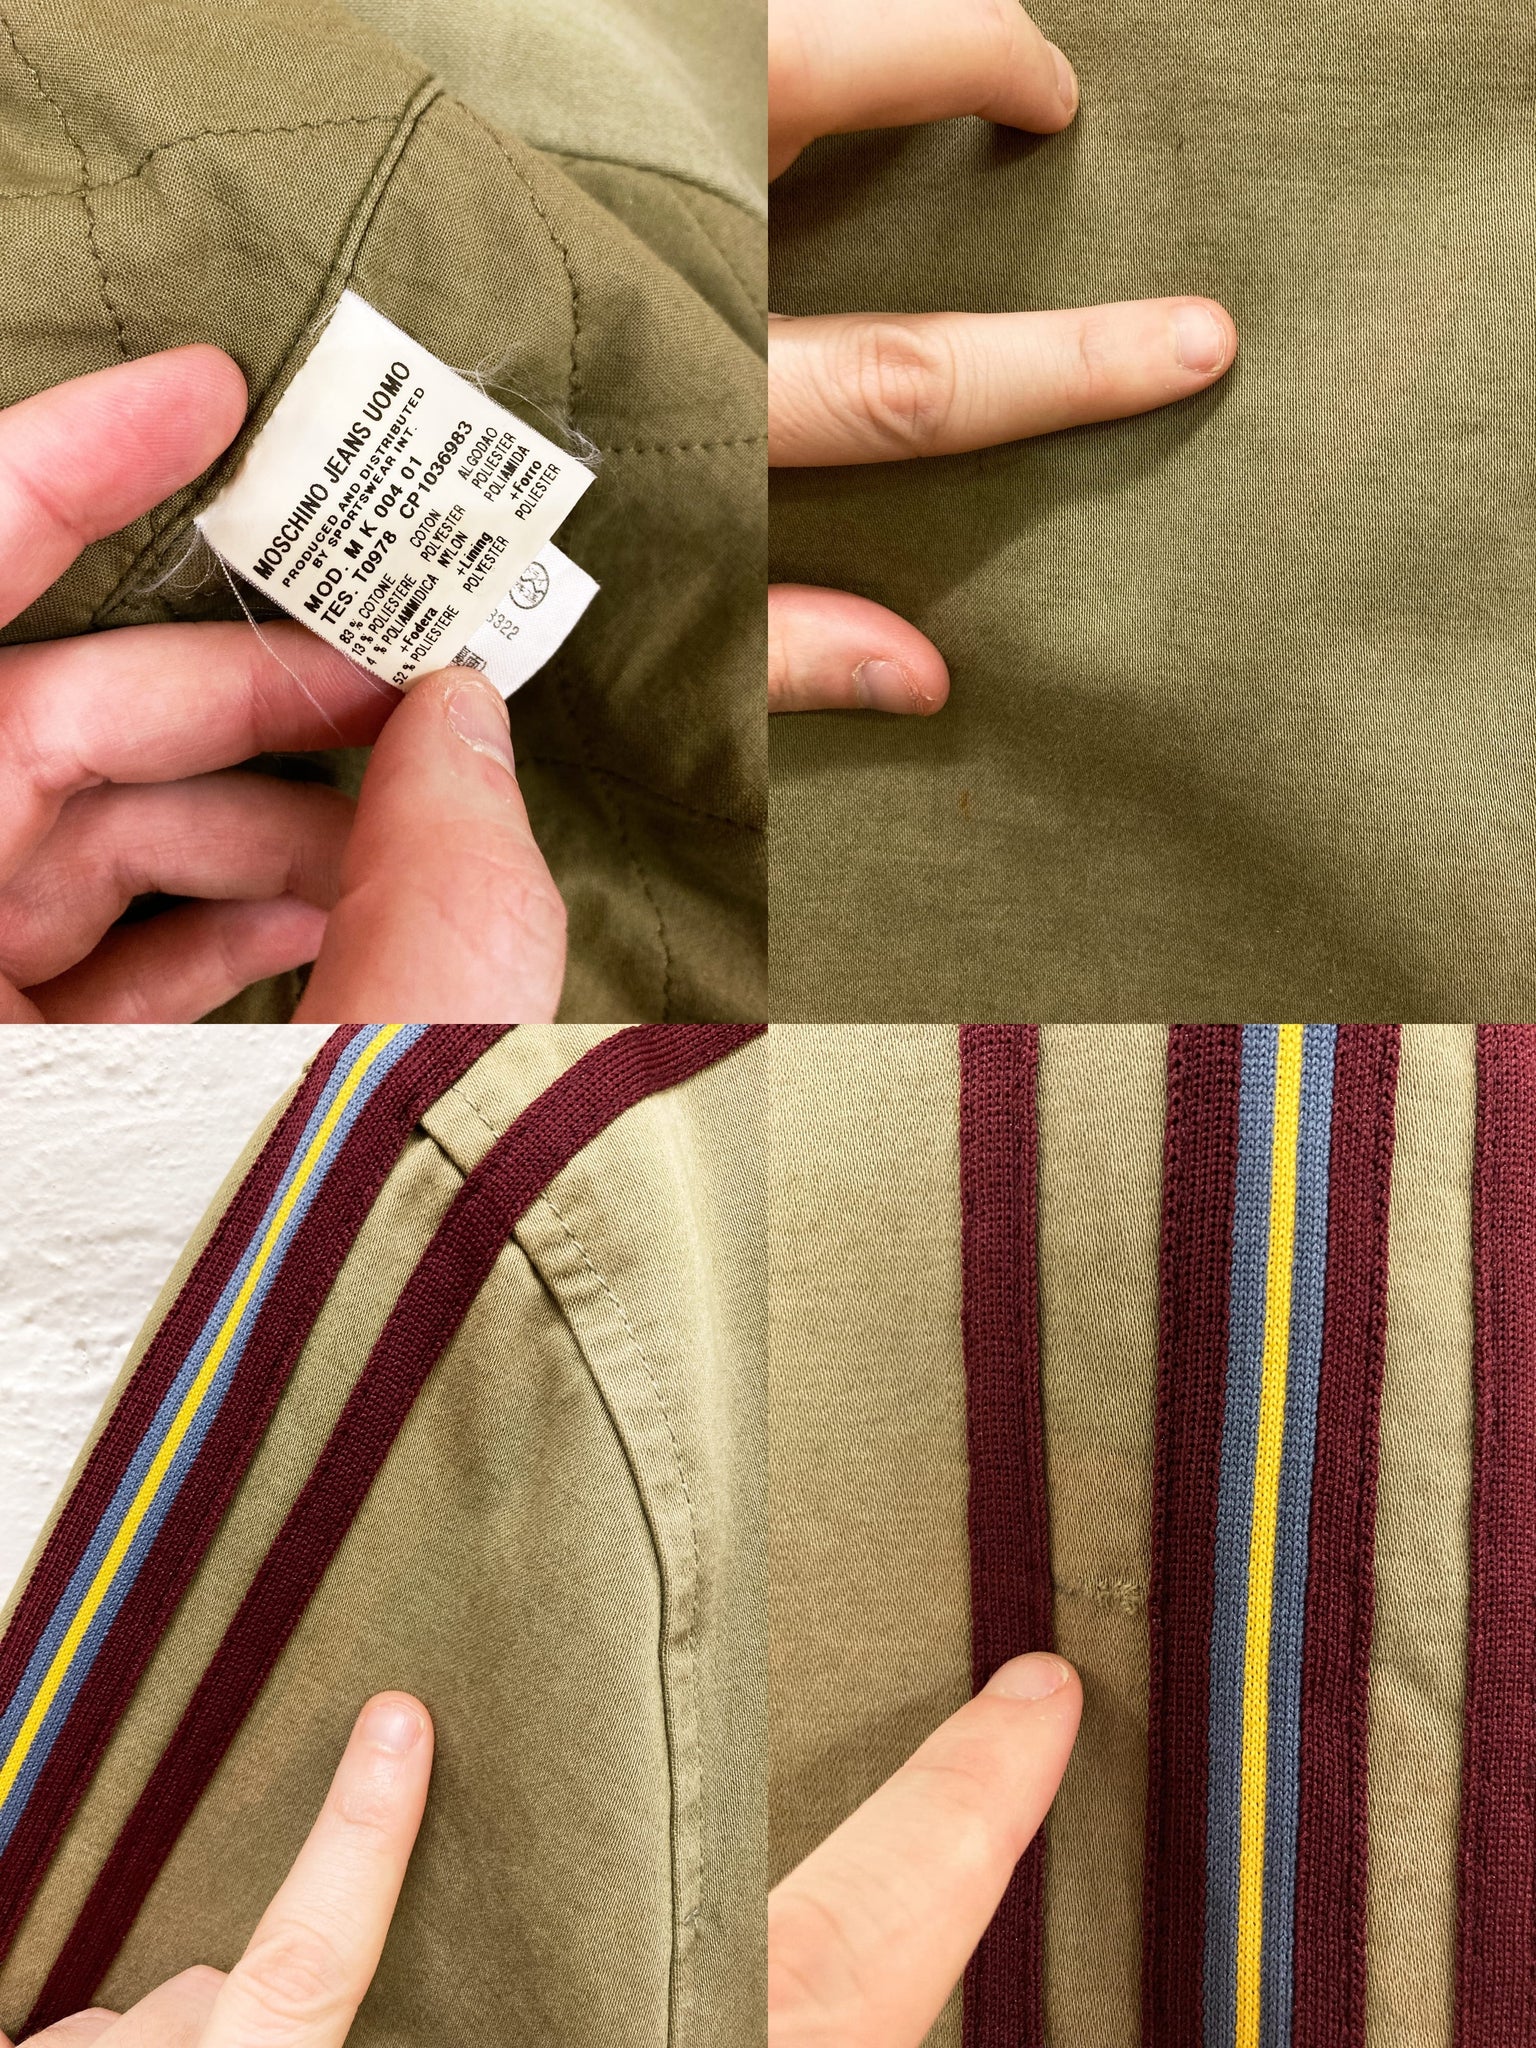 Moschino Jeans 1990s padded khaki cotton striped sleeve coat - size 50